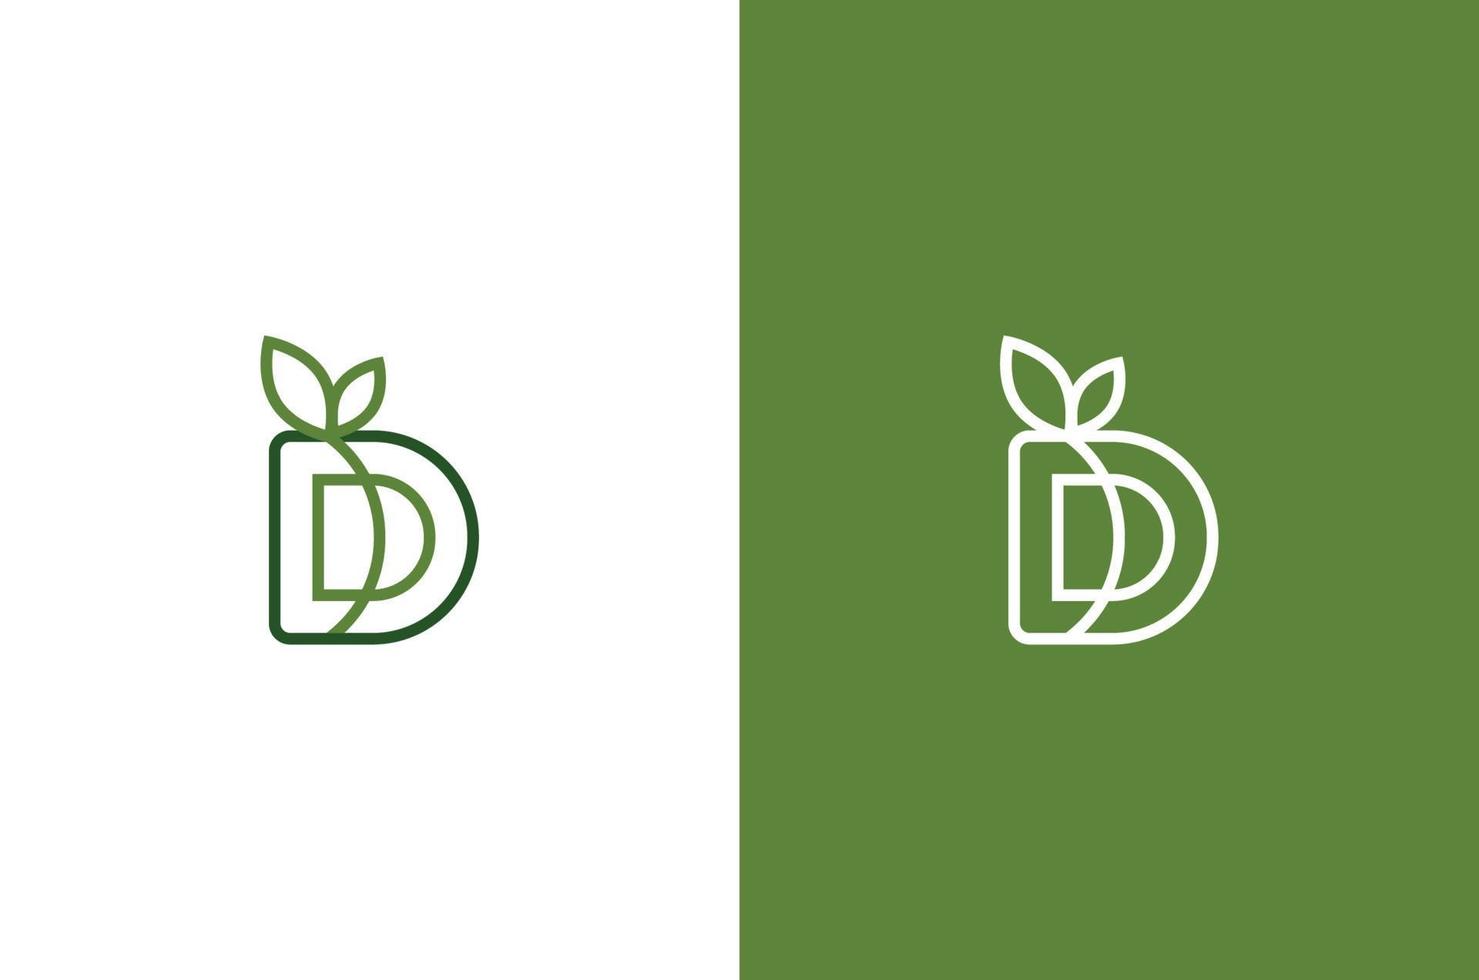 A Creative DD Letter Logo With A Vegan Food Logo Concept vector